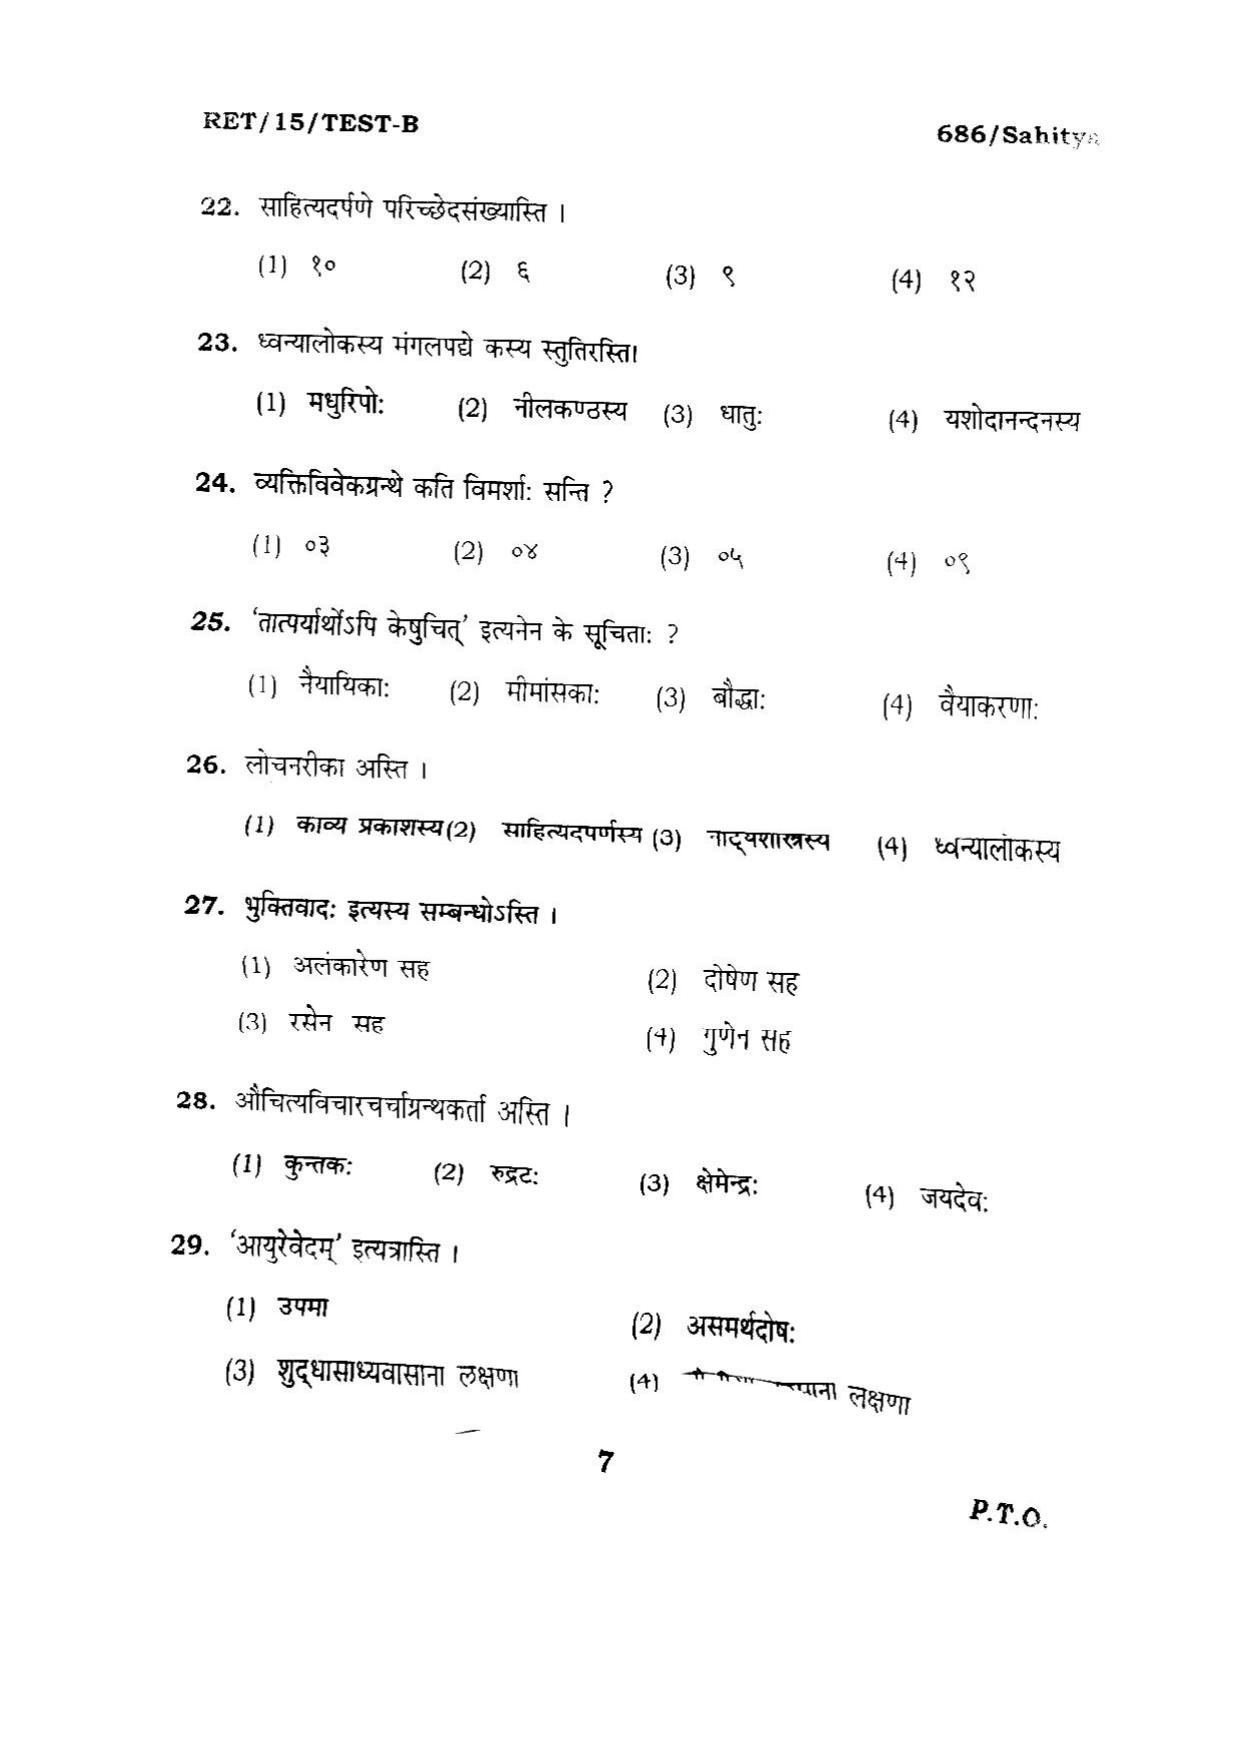 BHU RET SAHITYA 2015 Question Paper - Page 7